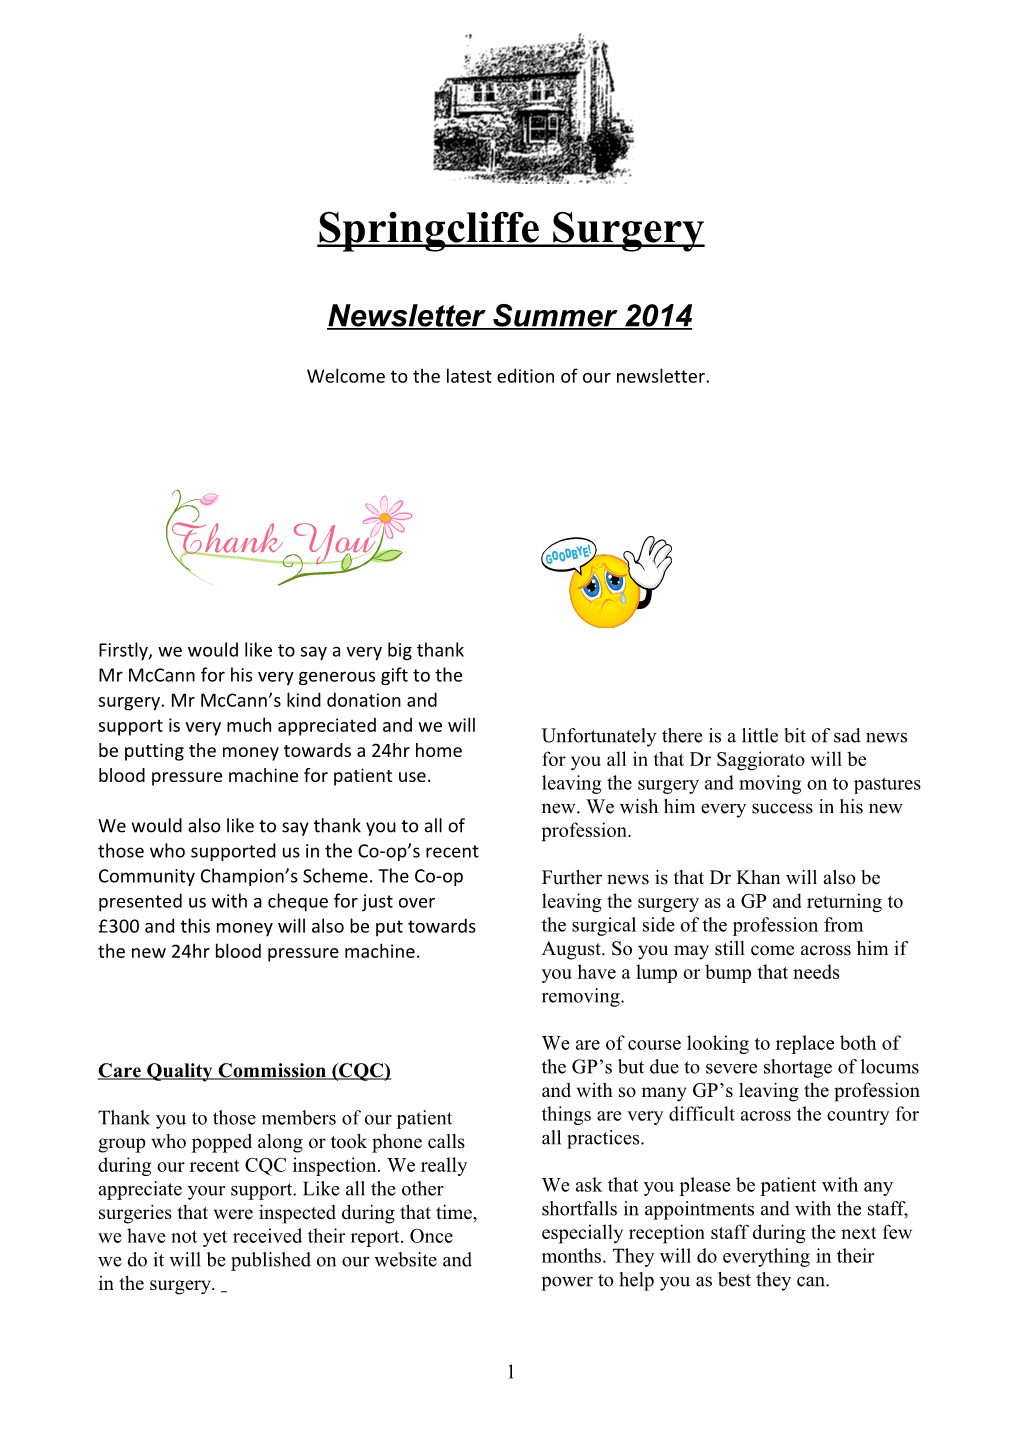 Springcliffe Surgery